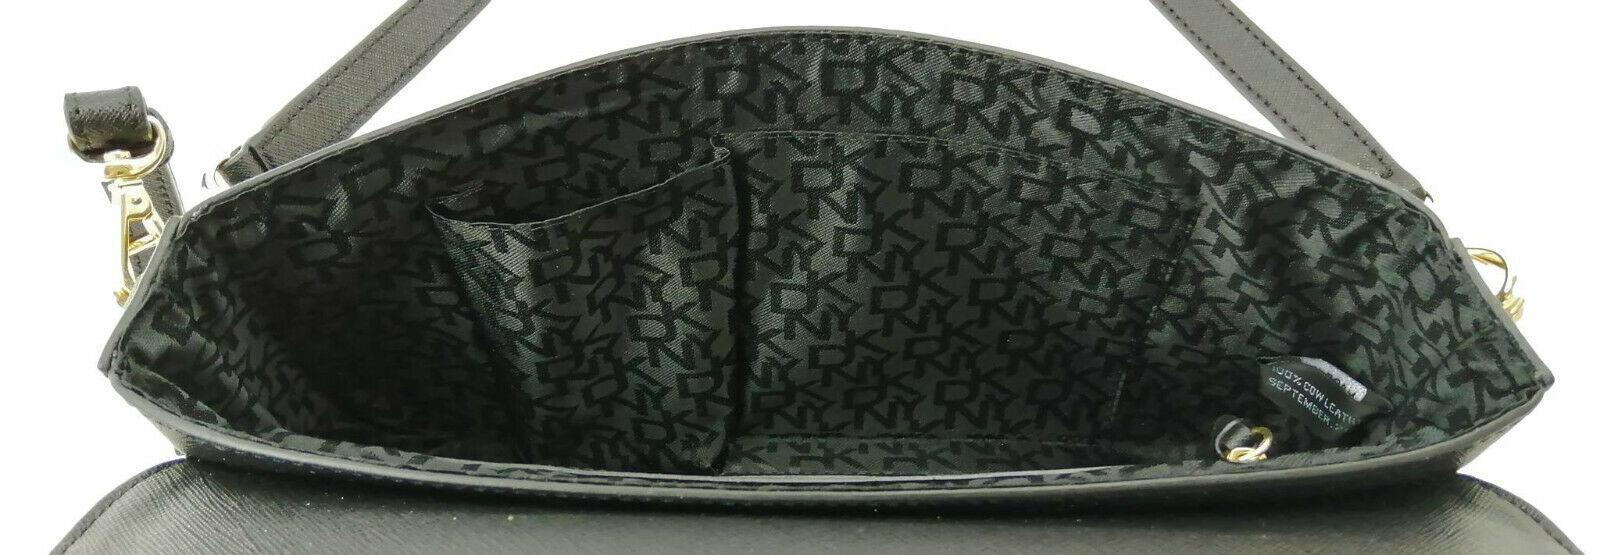 DKNY Cross Body Shoulder Clutch Bag Black White Small Handbag Snakeskin  Embossed Leather